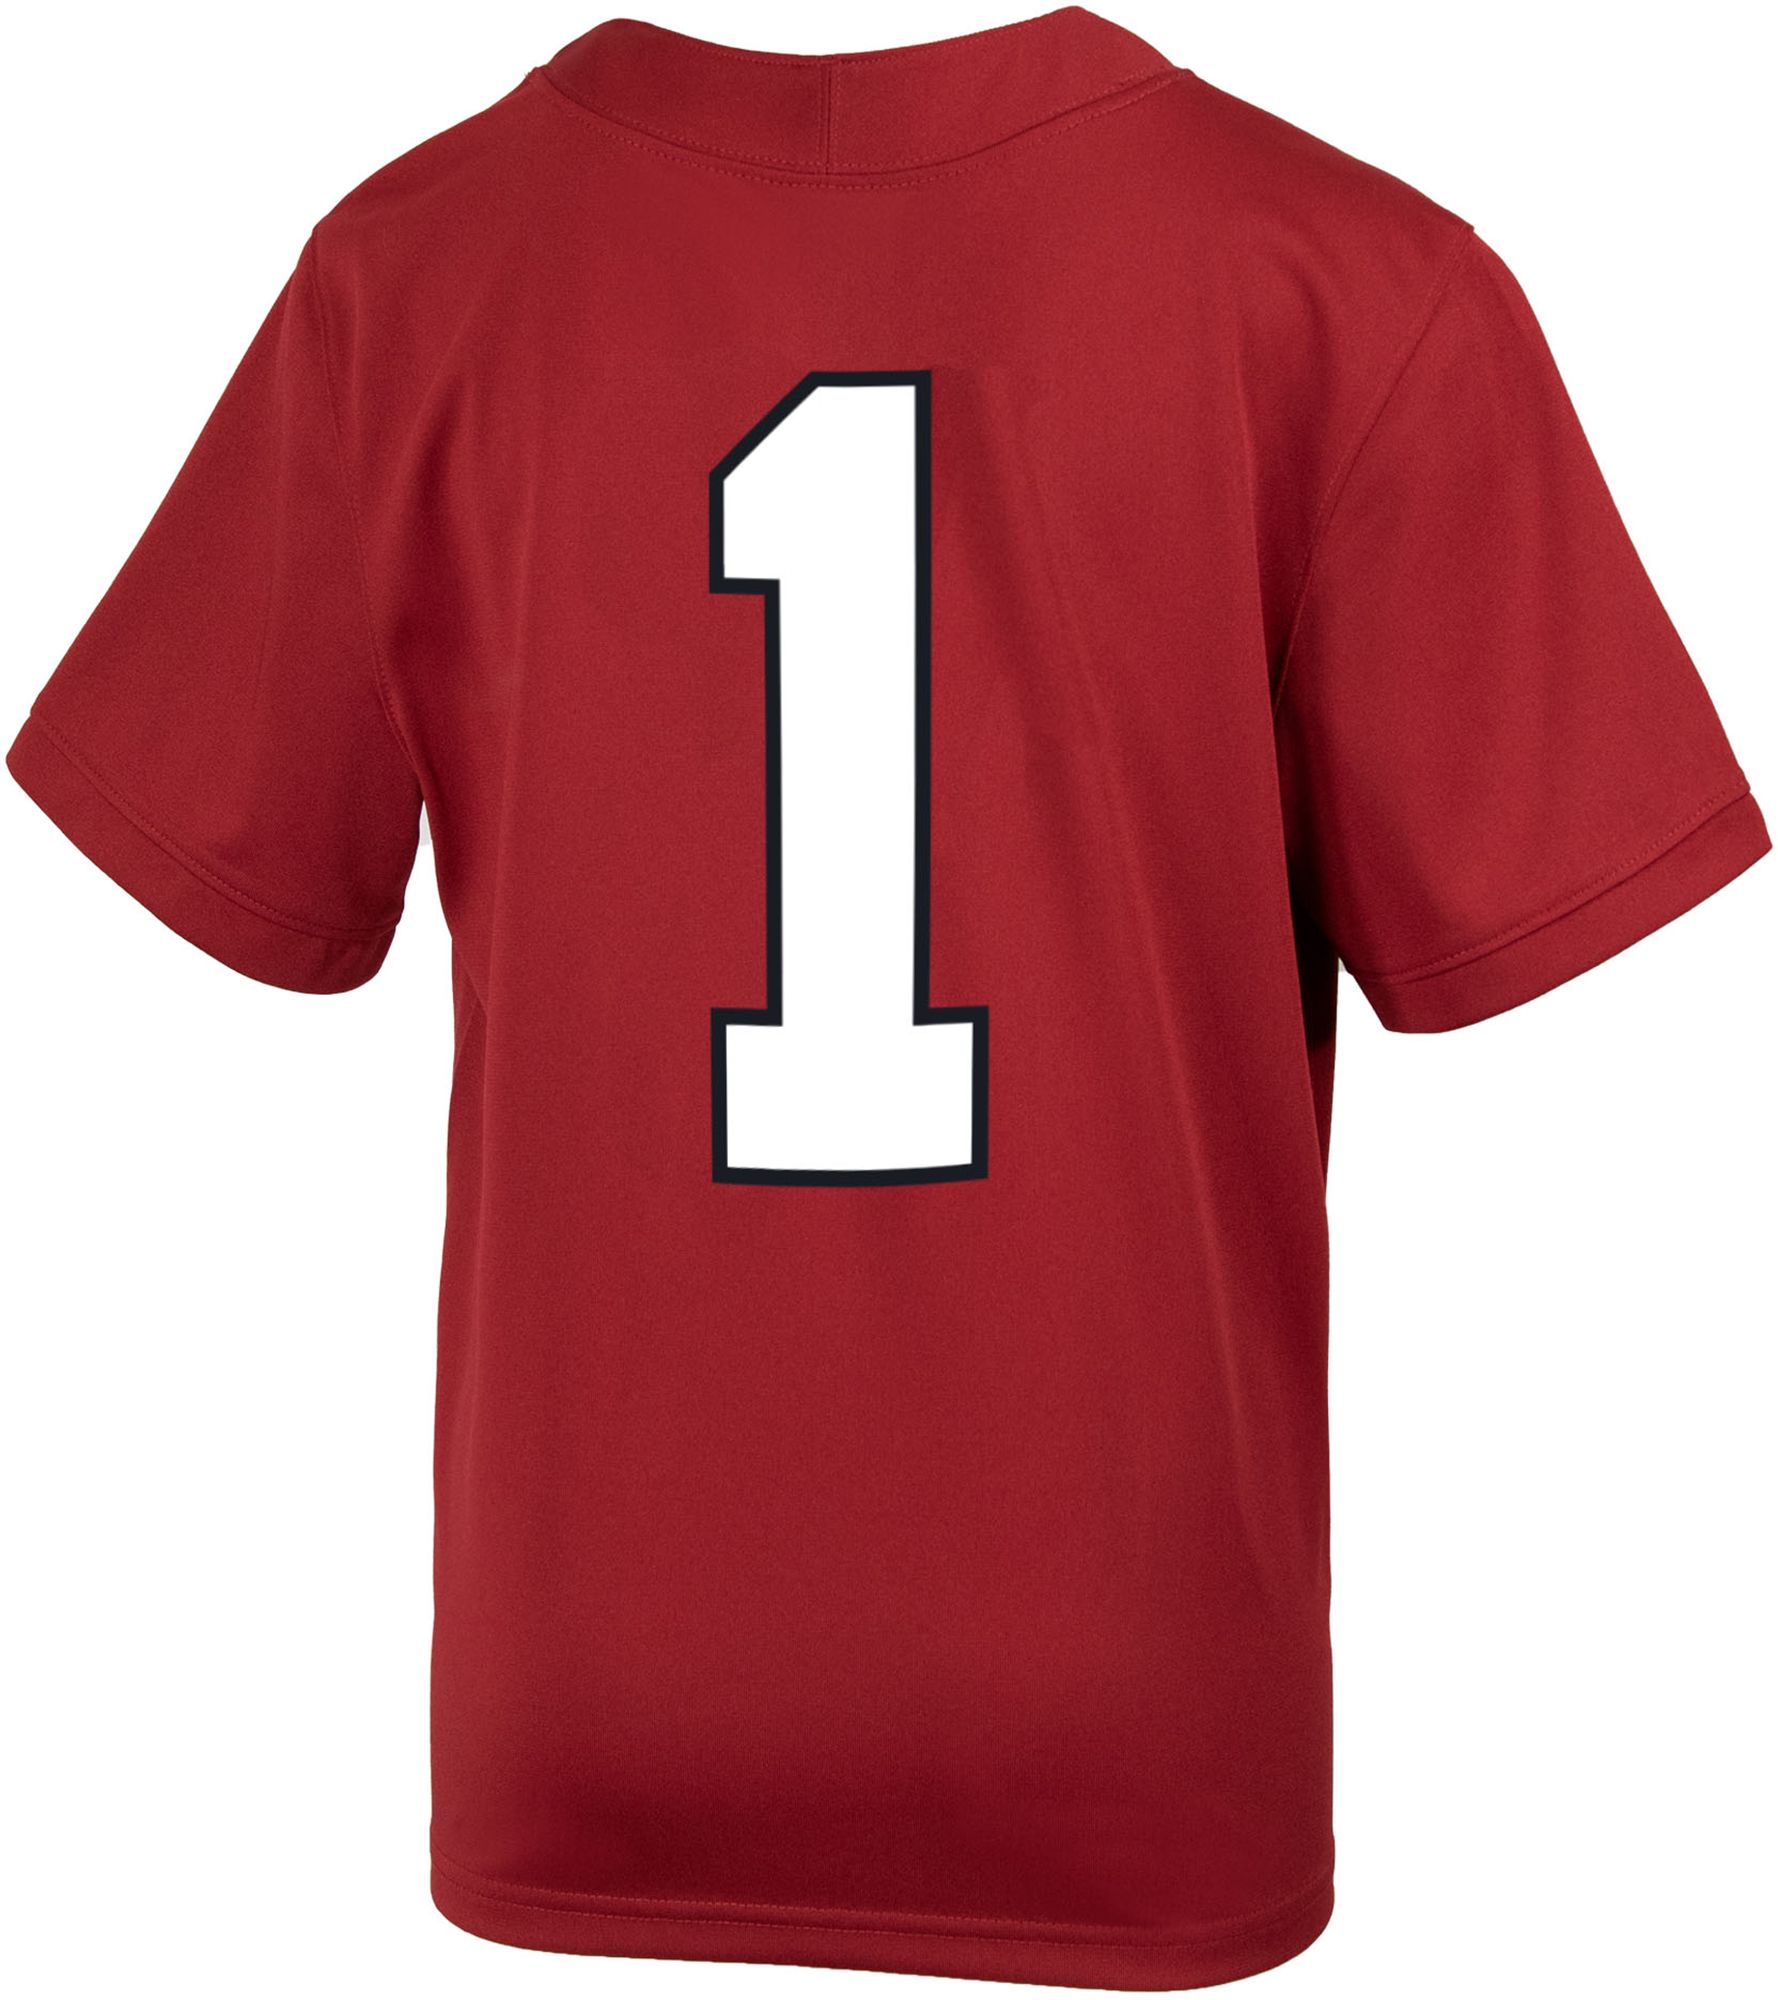 Nike Little Kids' Stanford Cardinal #1 Replica Football Jersey